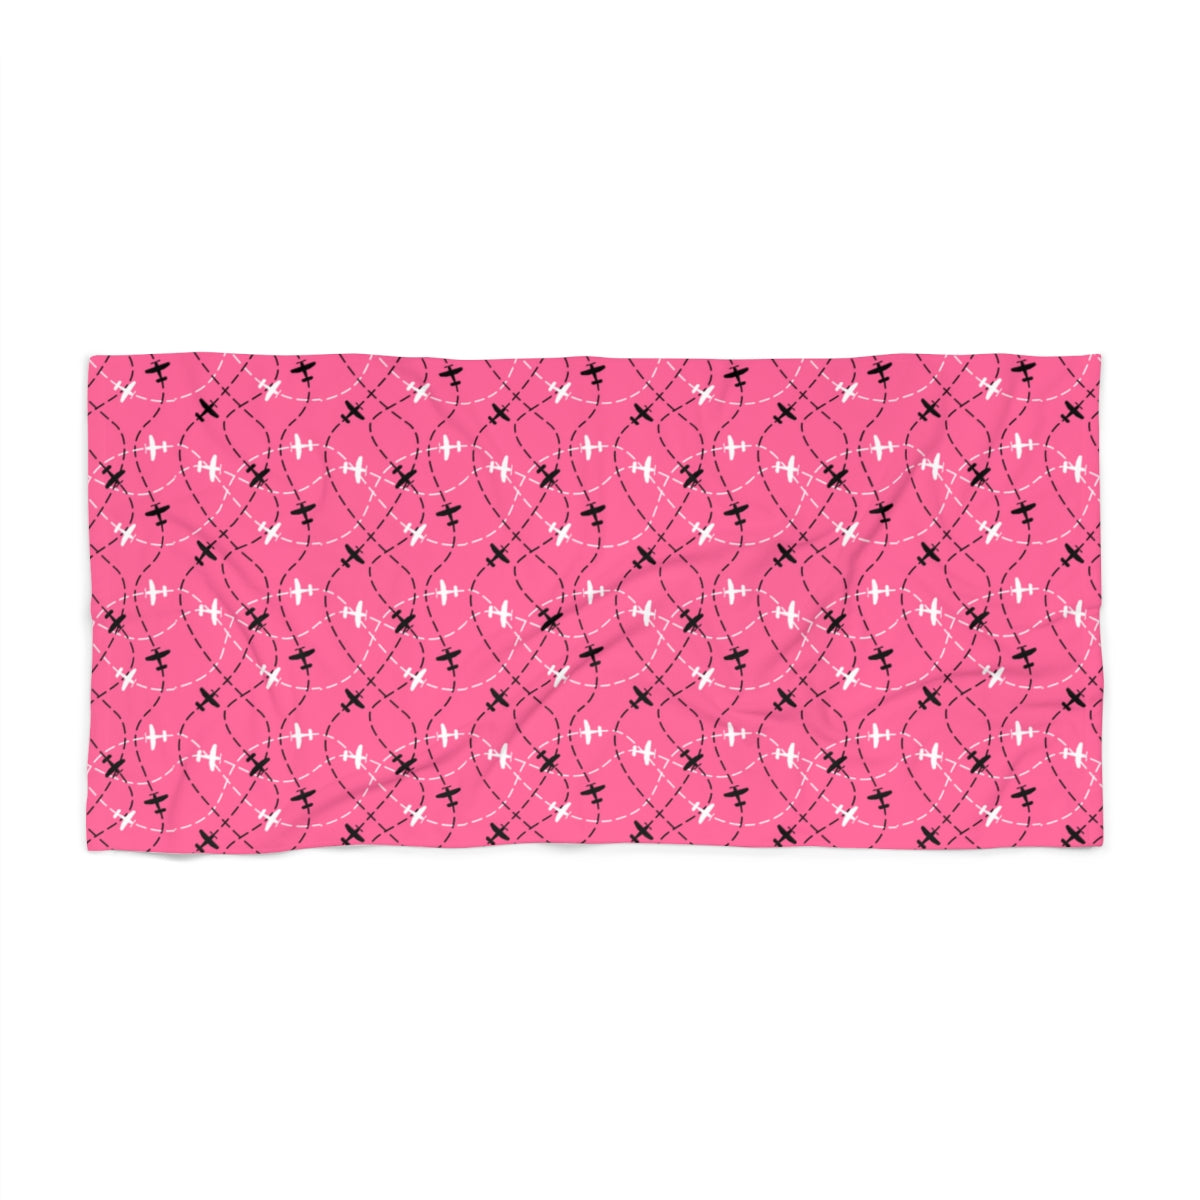 Pink Plane Pattern Beach Towel